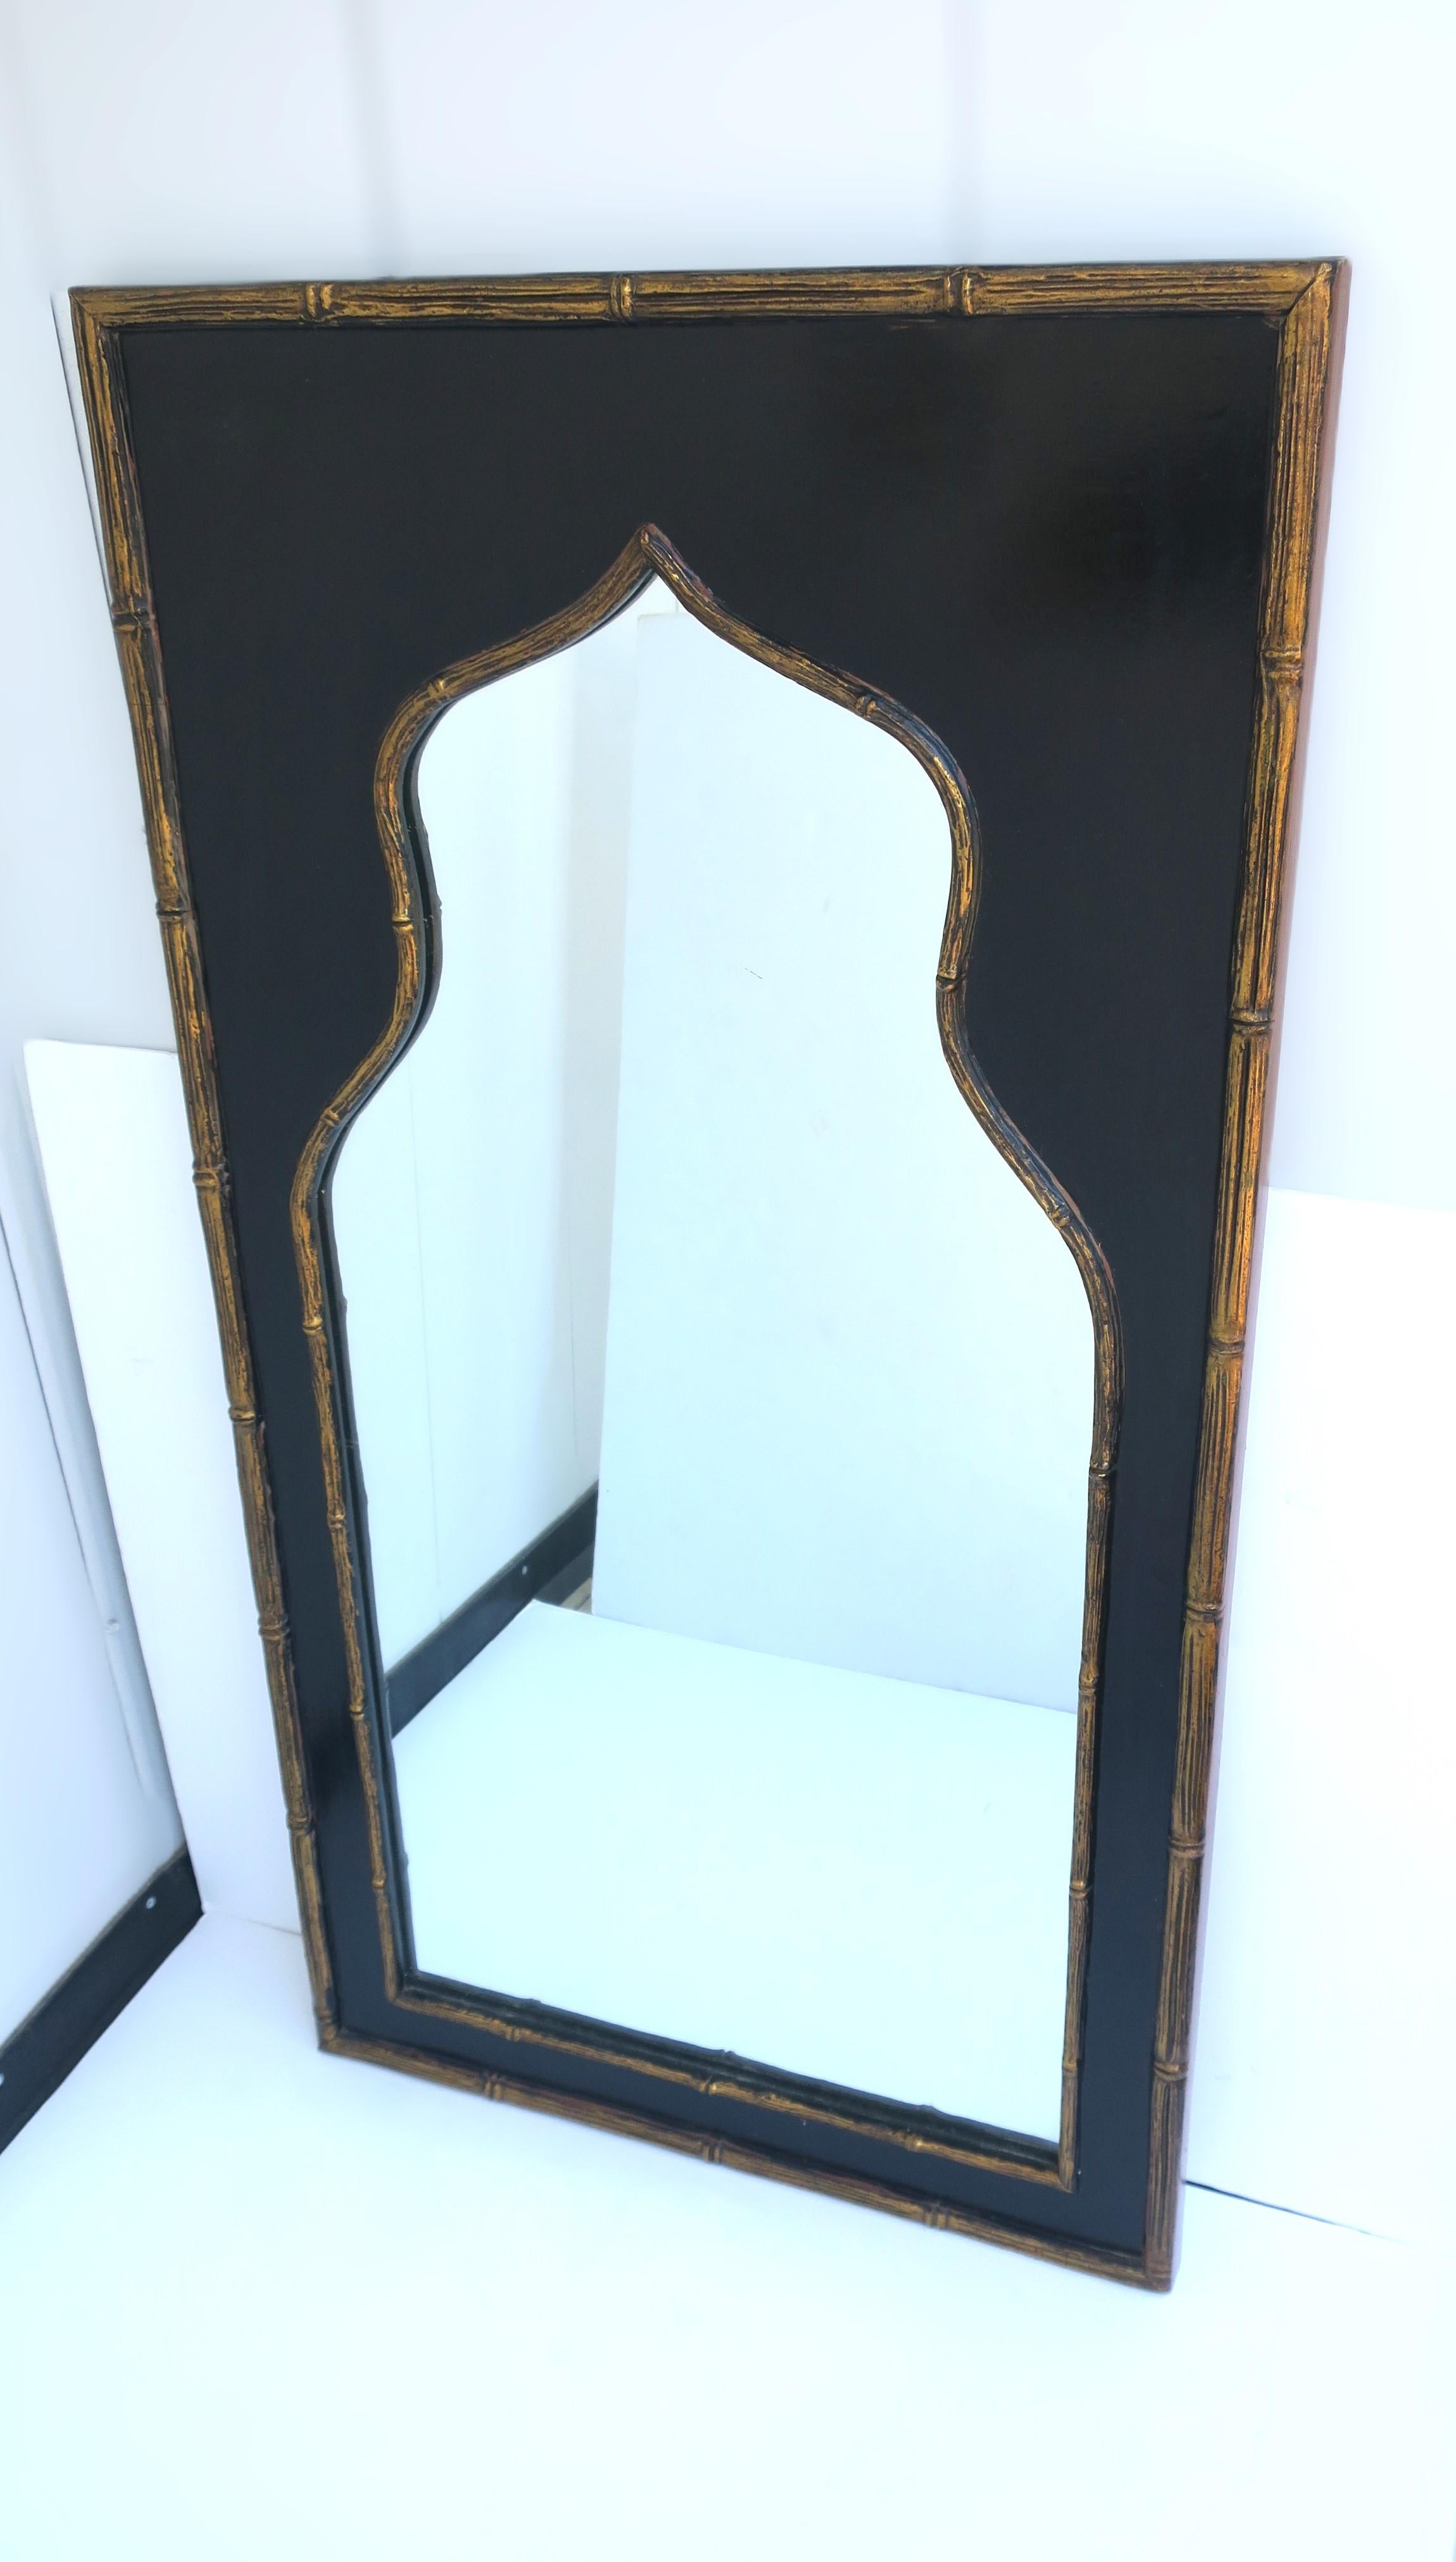 Gilt Black and Gold Wall Mirror with Moorish Bamboo Detail